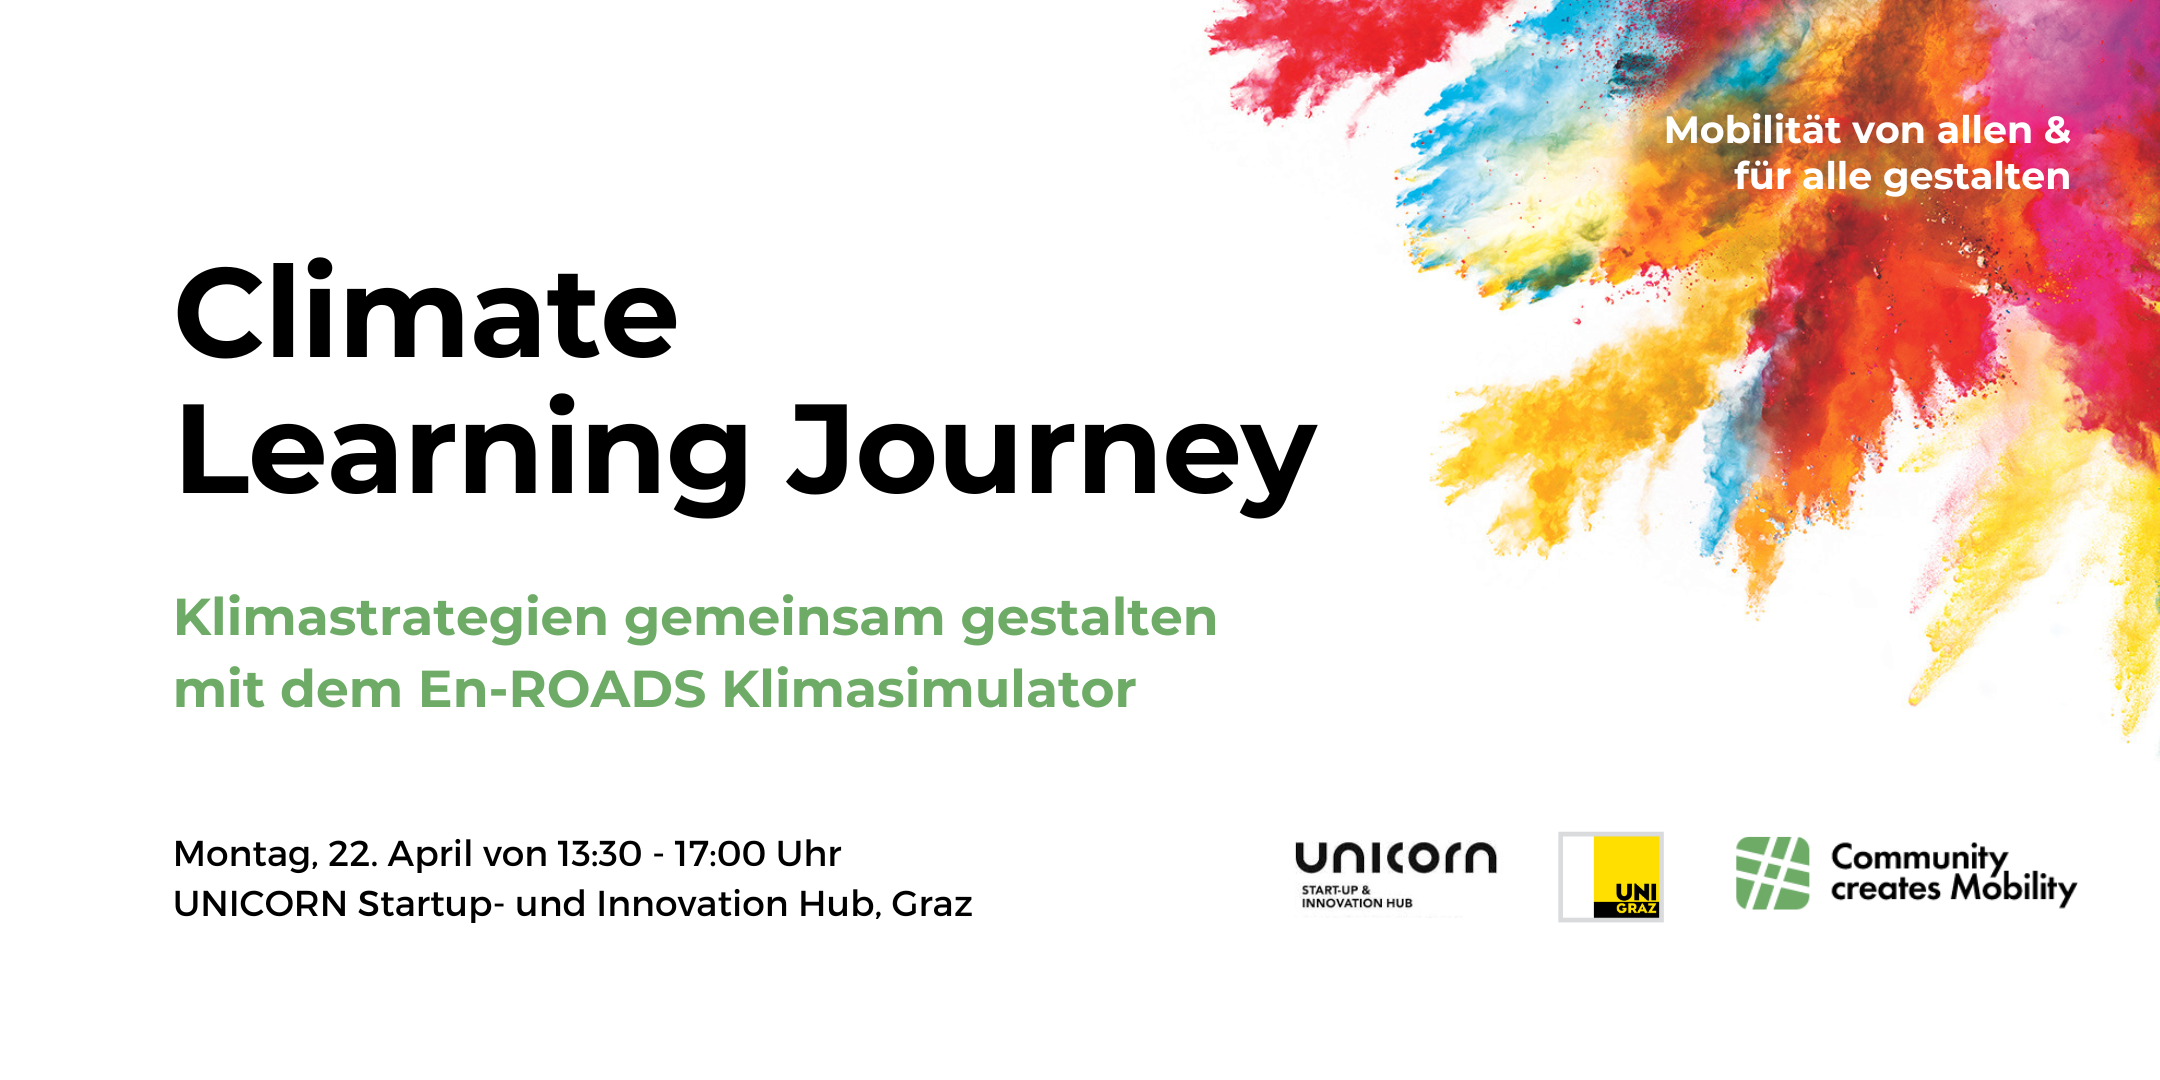 Climate Learning Journey in Graz